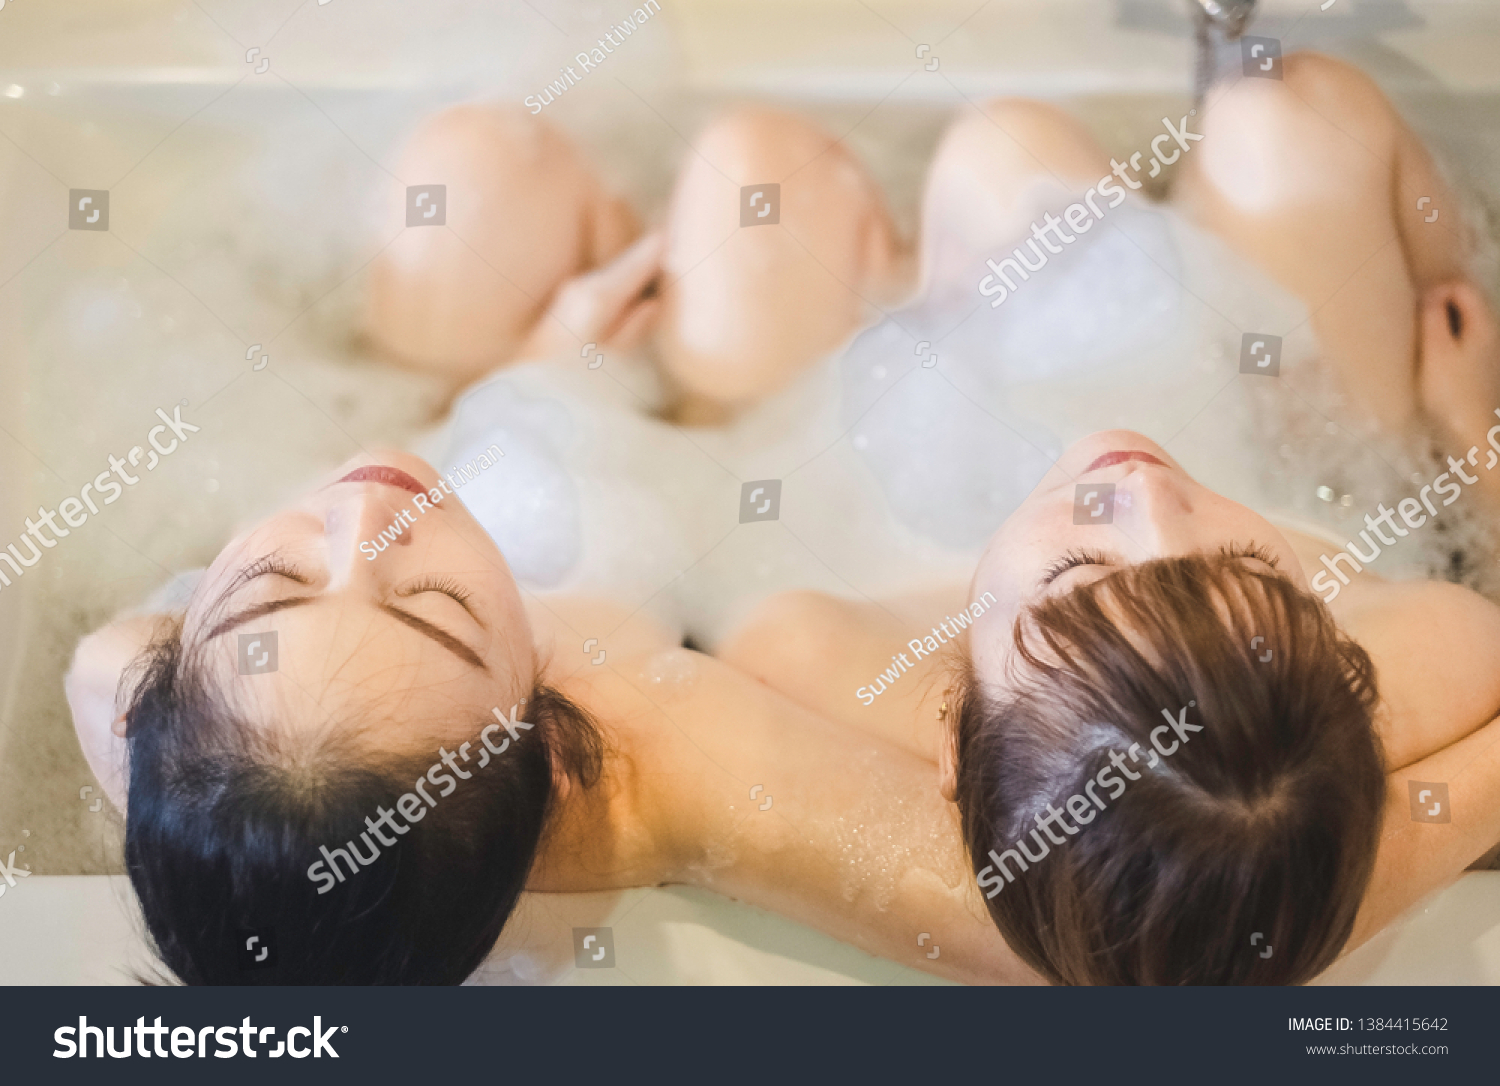 Sleeping Bathtub Girls Naked